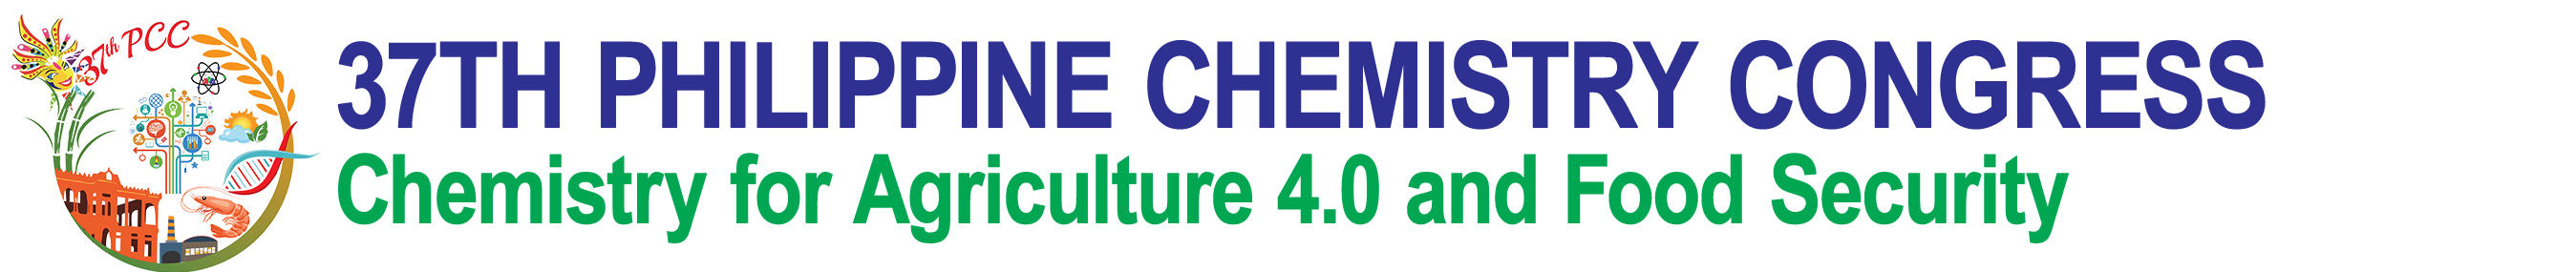 37th Philippine Chemistry Congress Logo